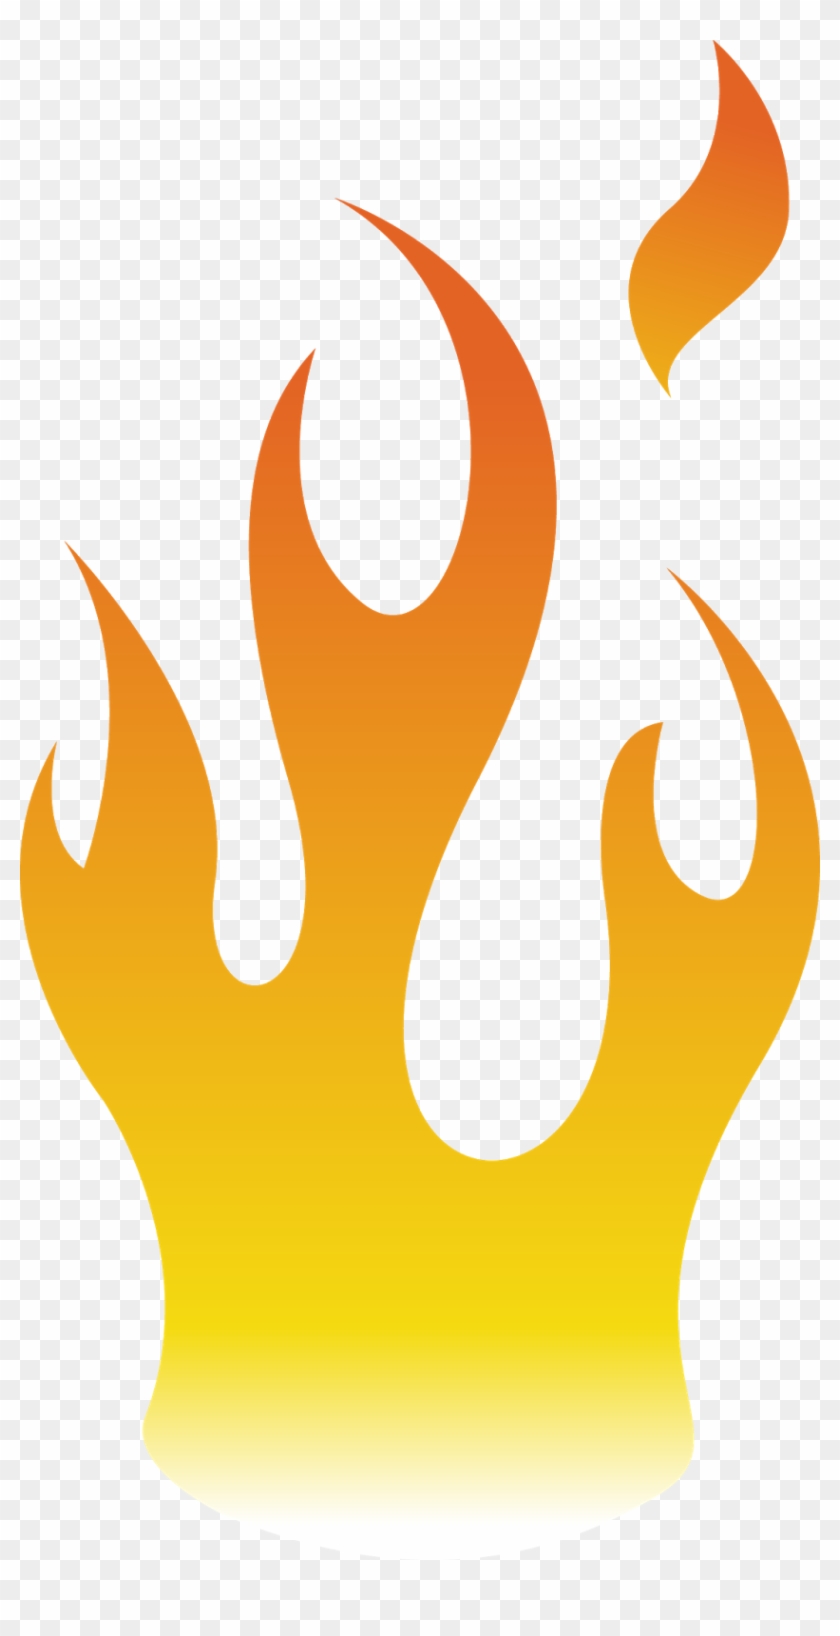 Flame Fire Clip Art - Flame #1229280